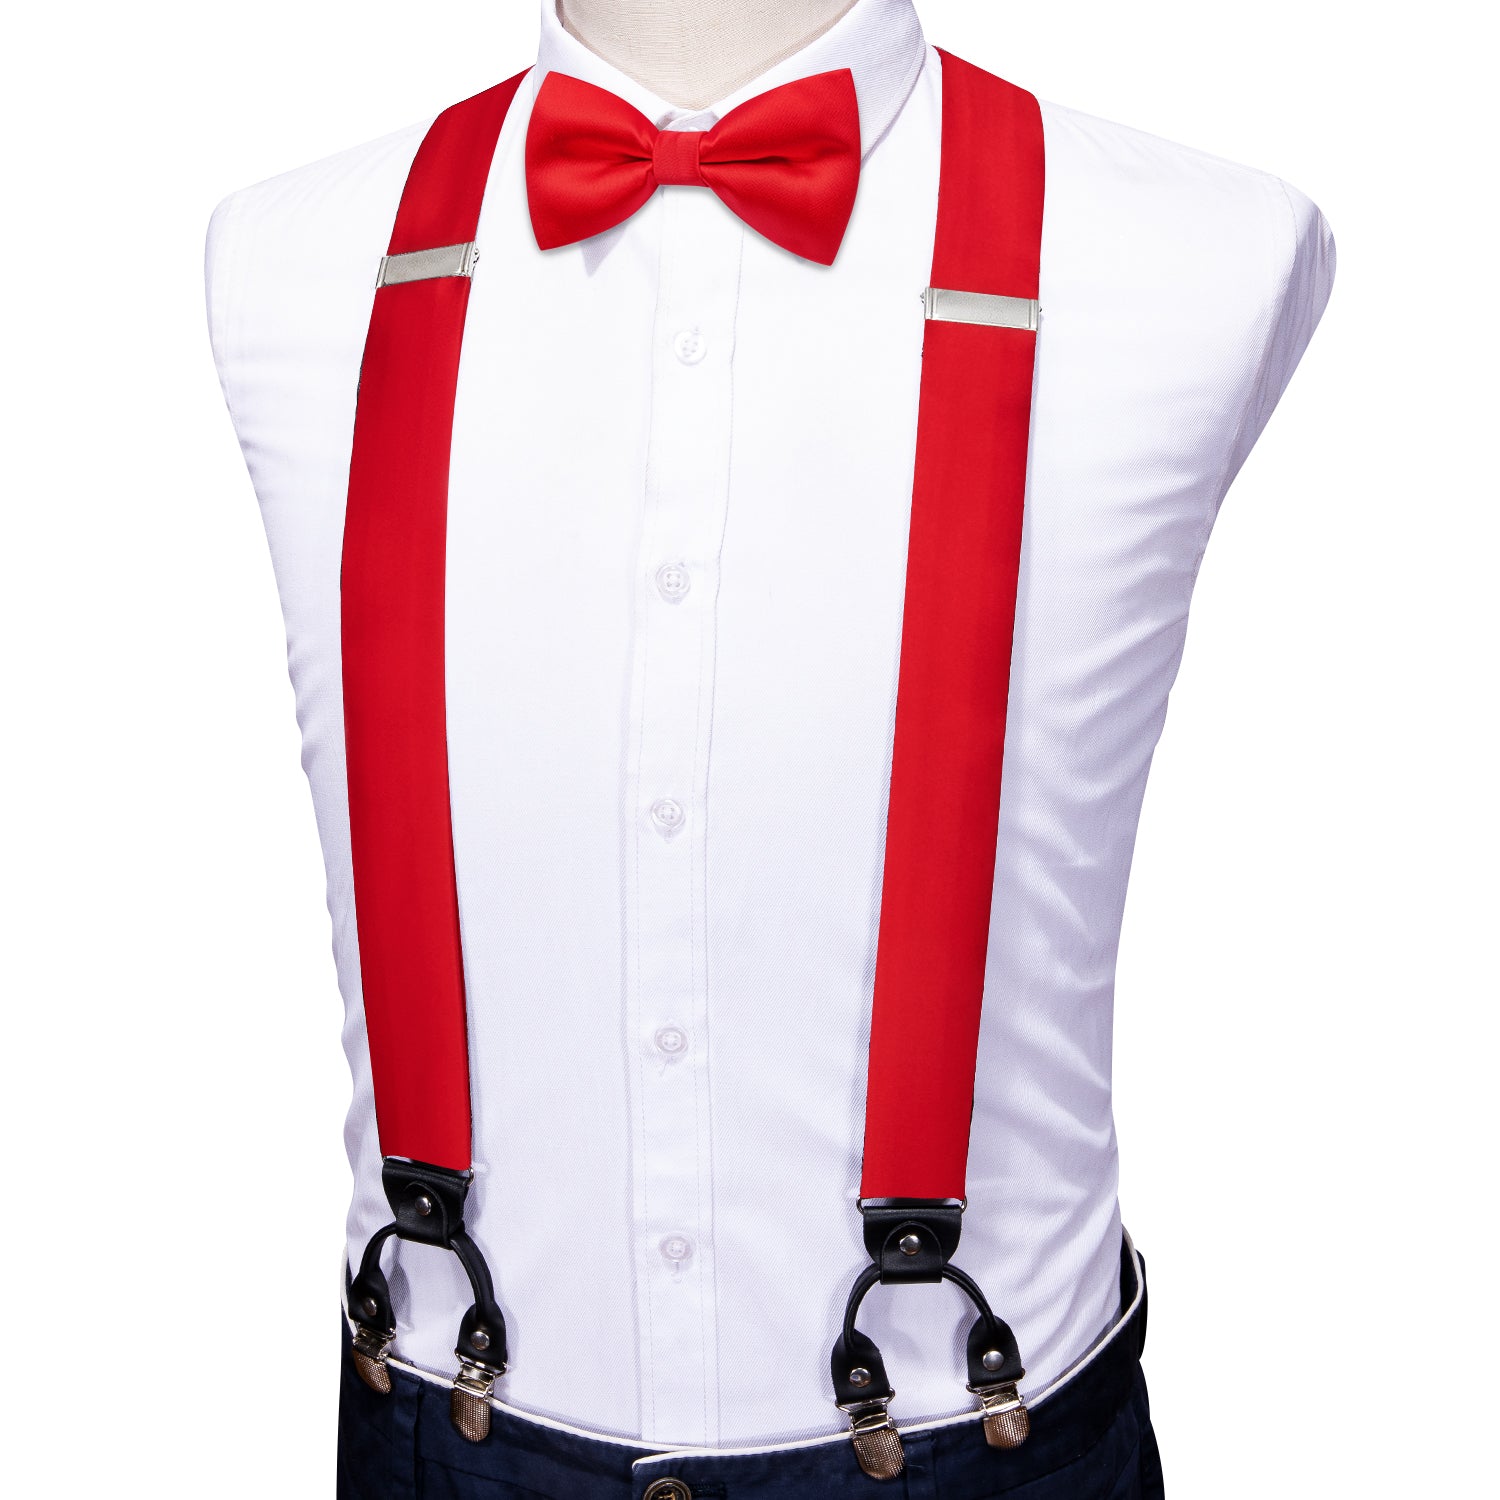 Barry.wang Red Tie Solid Y Back Adjustable Suspenders Bow Tie Set Wedding